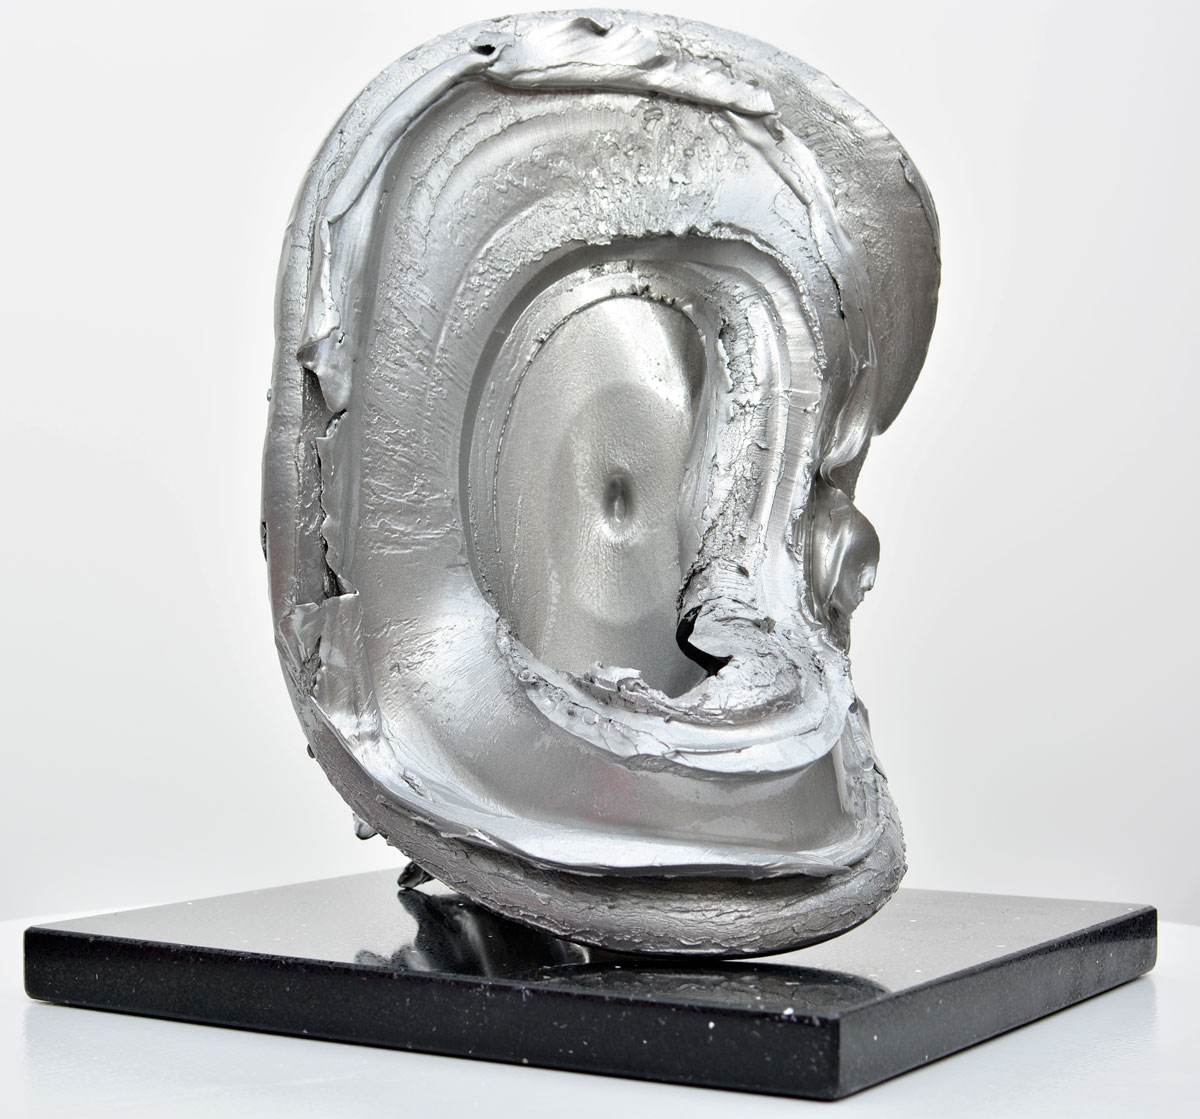 Silver sculpture on a black granite base